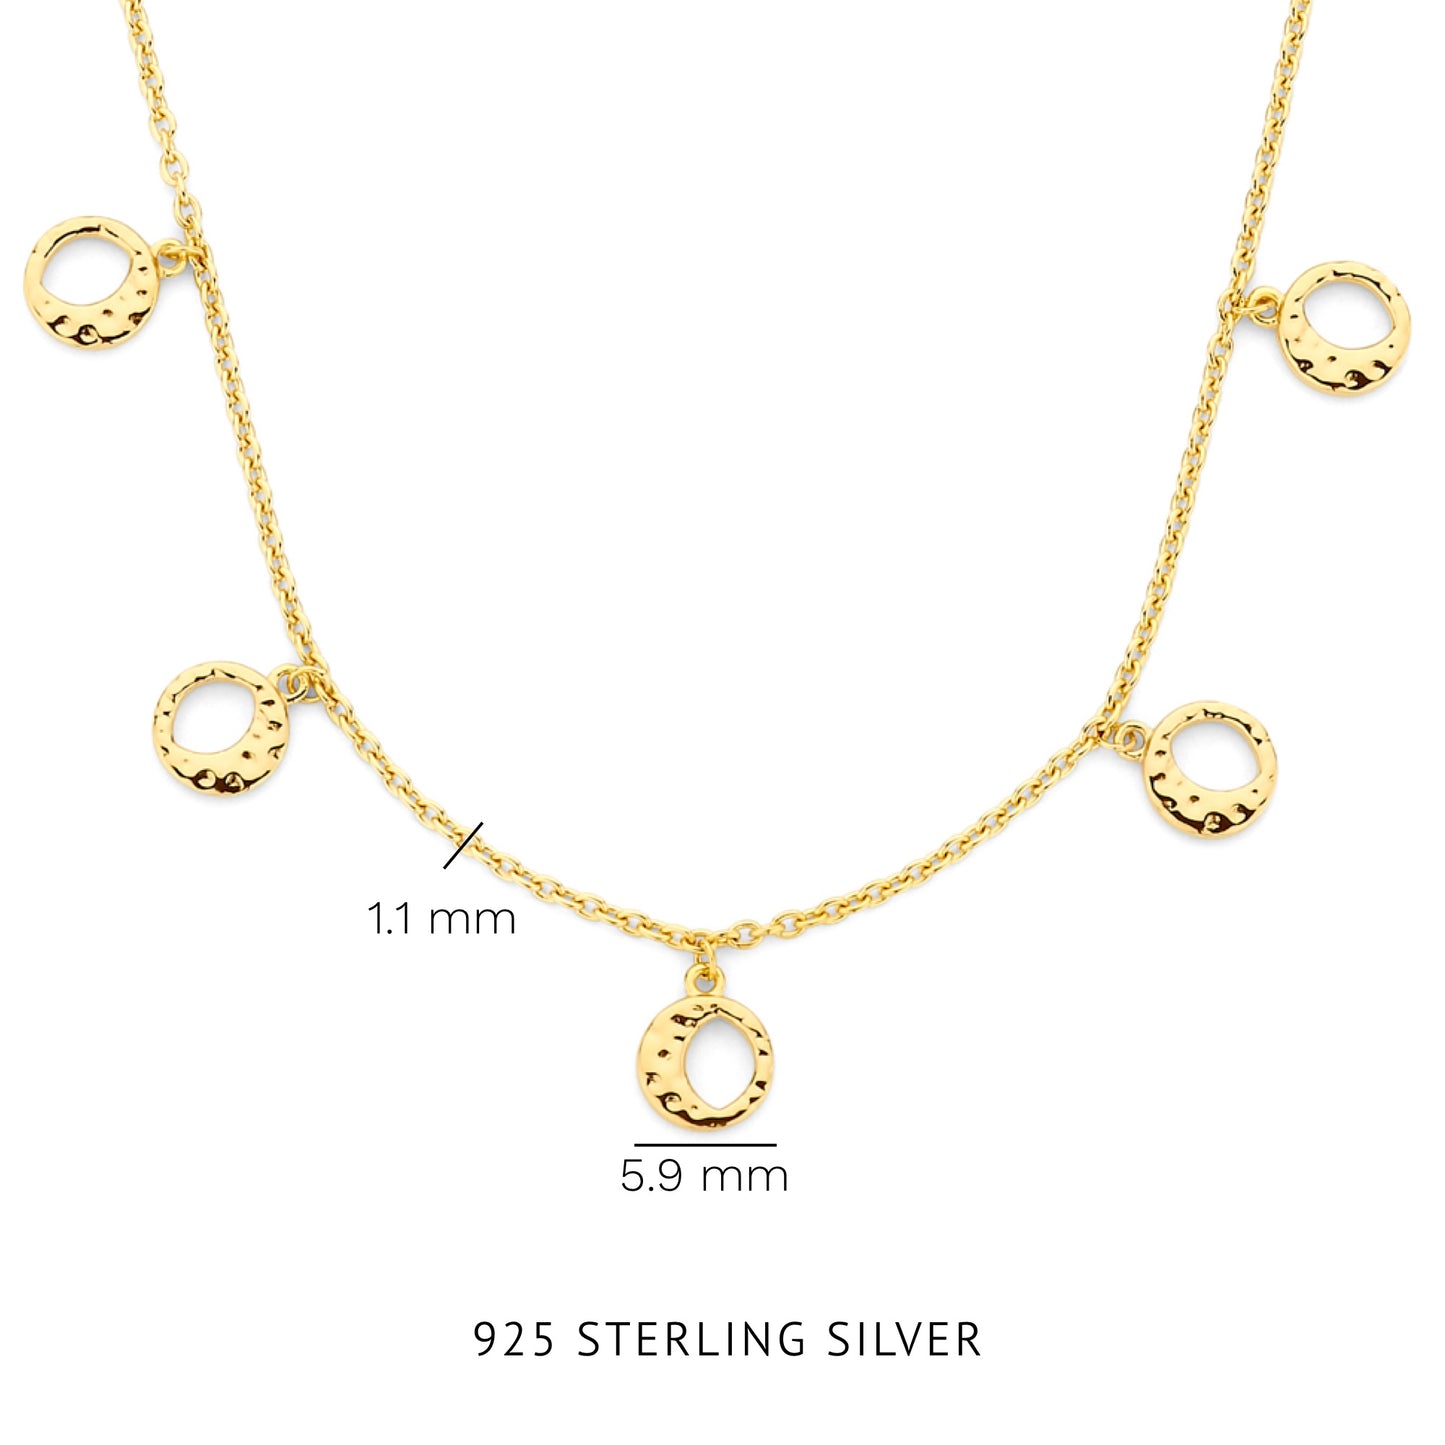 Violet's Gift 925 sterling silver gold plated necklace and bracelet gift set